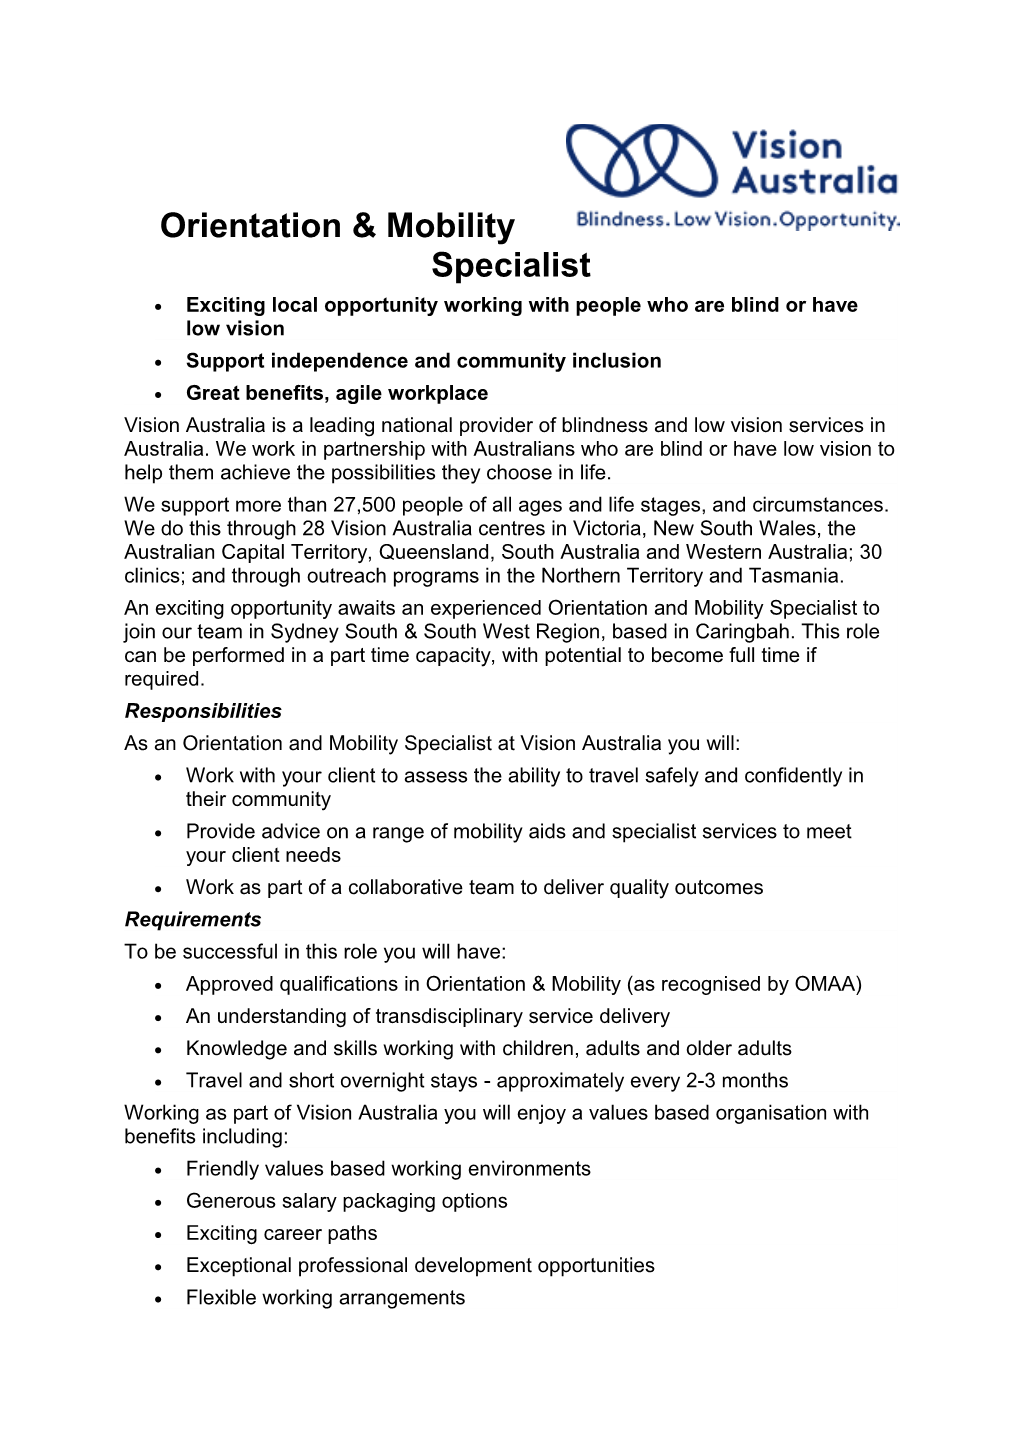 Orientation & Mobility Specialist